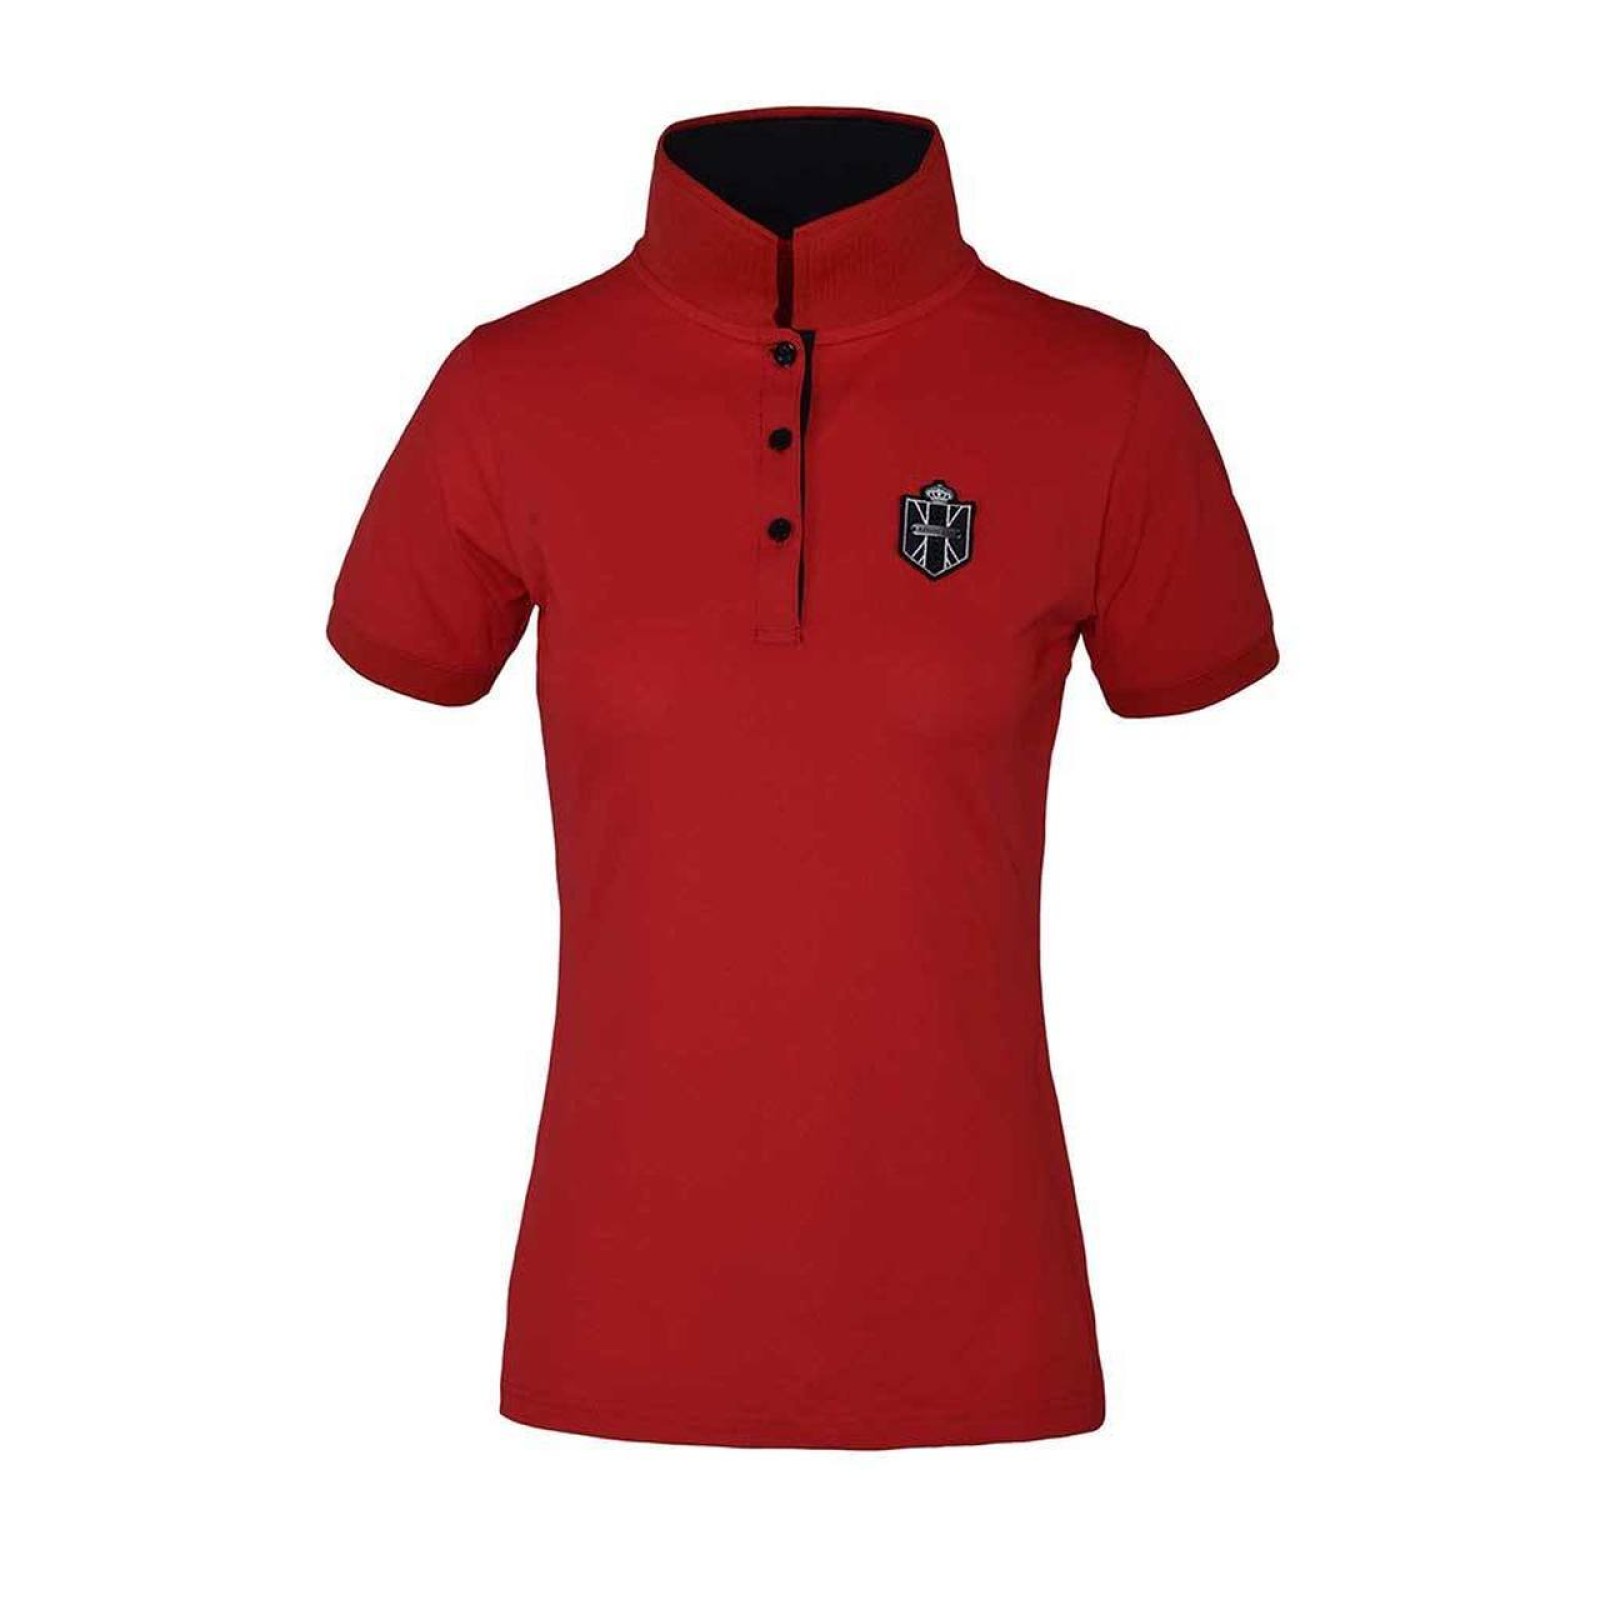 Kingsland Agape Red Tec Pique Polo Shirt Top